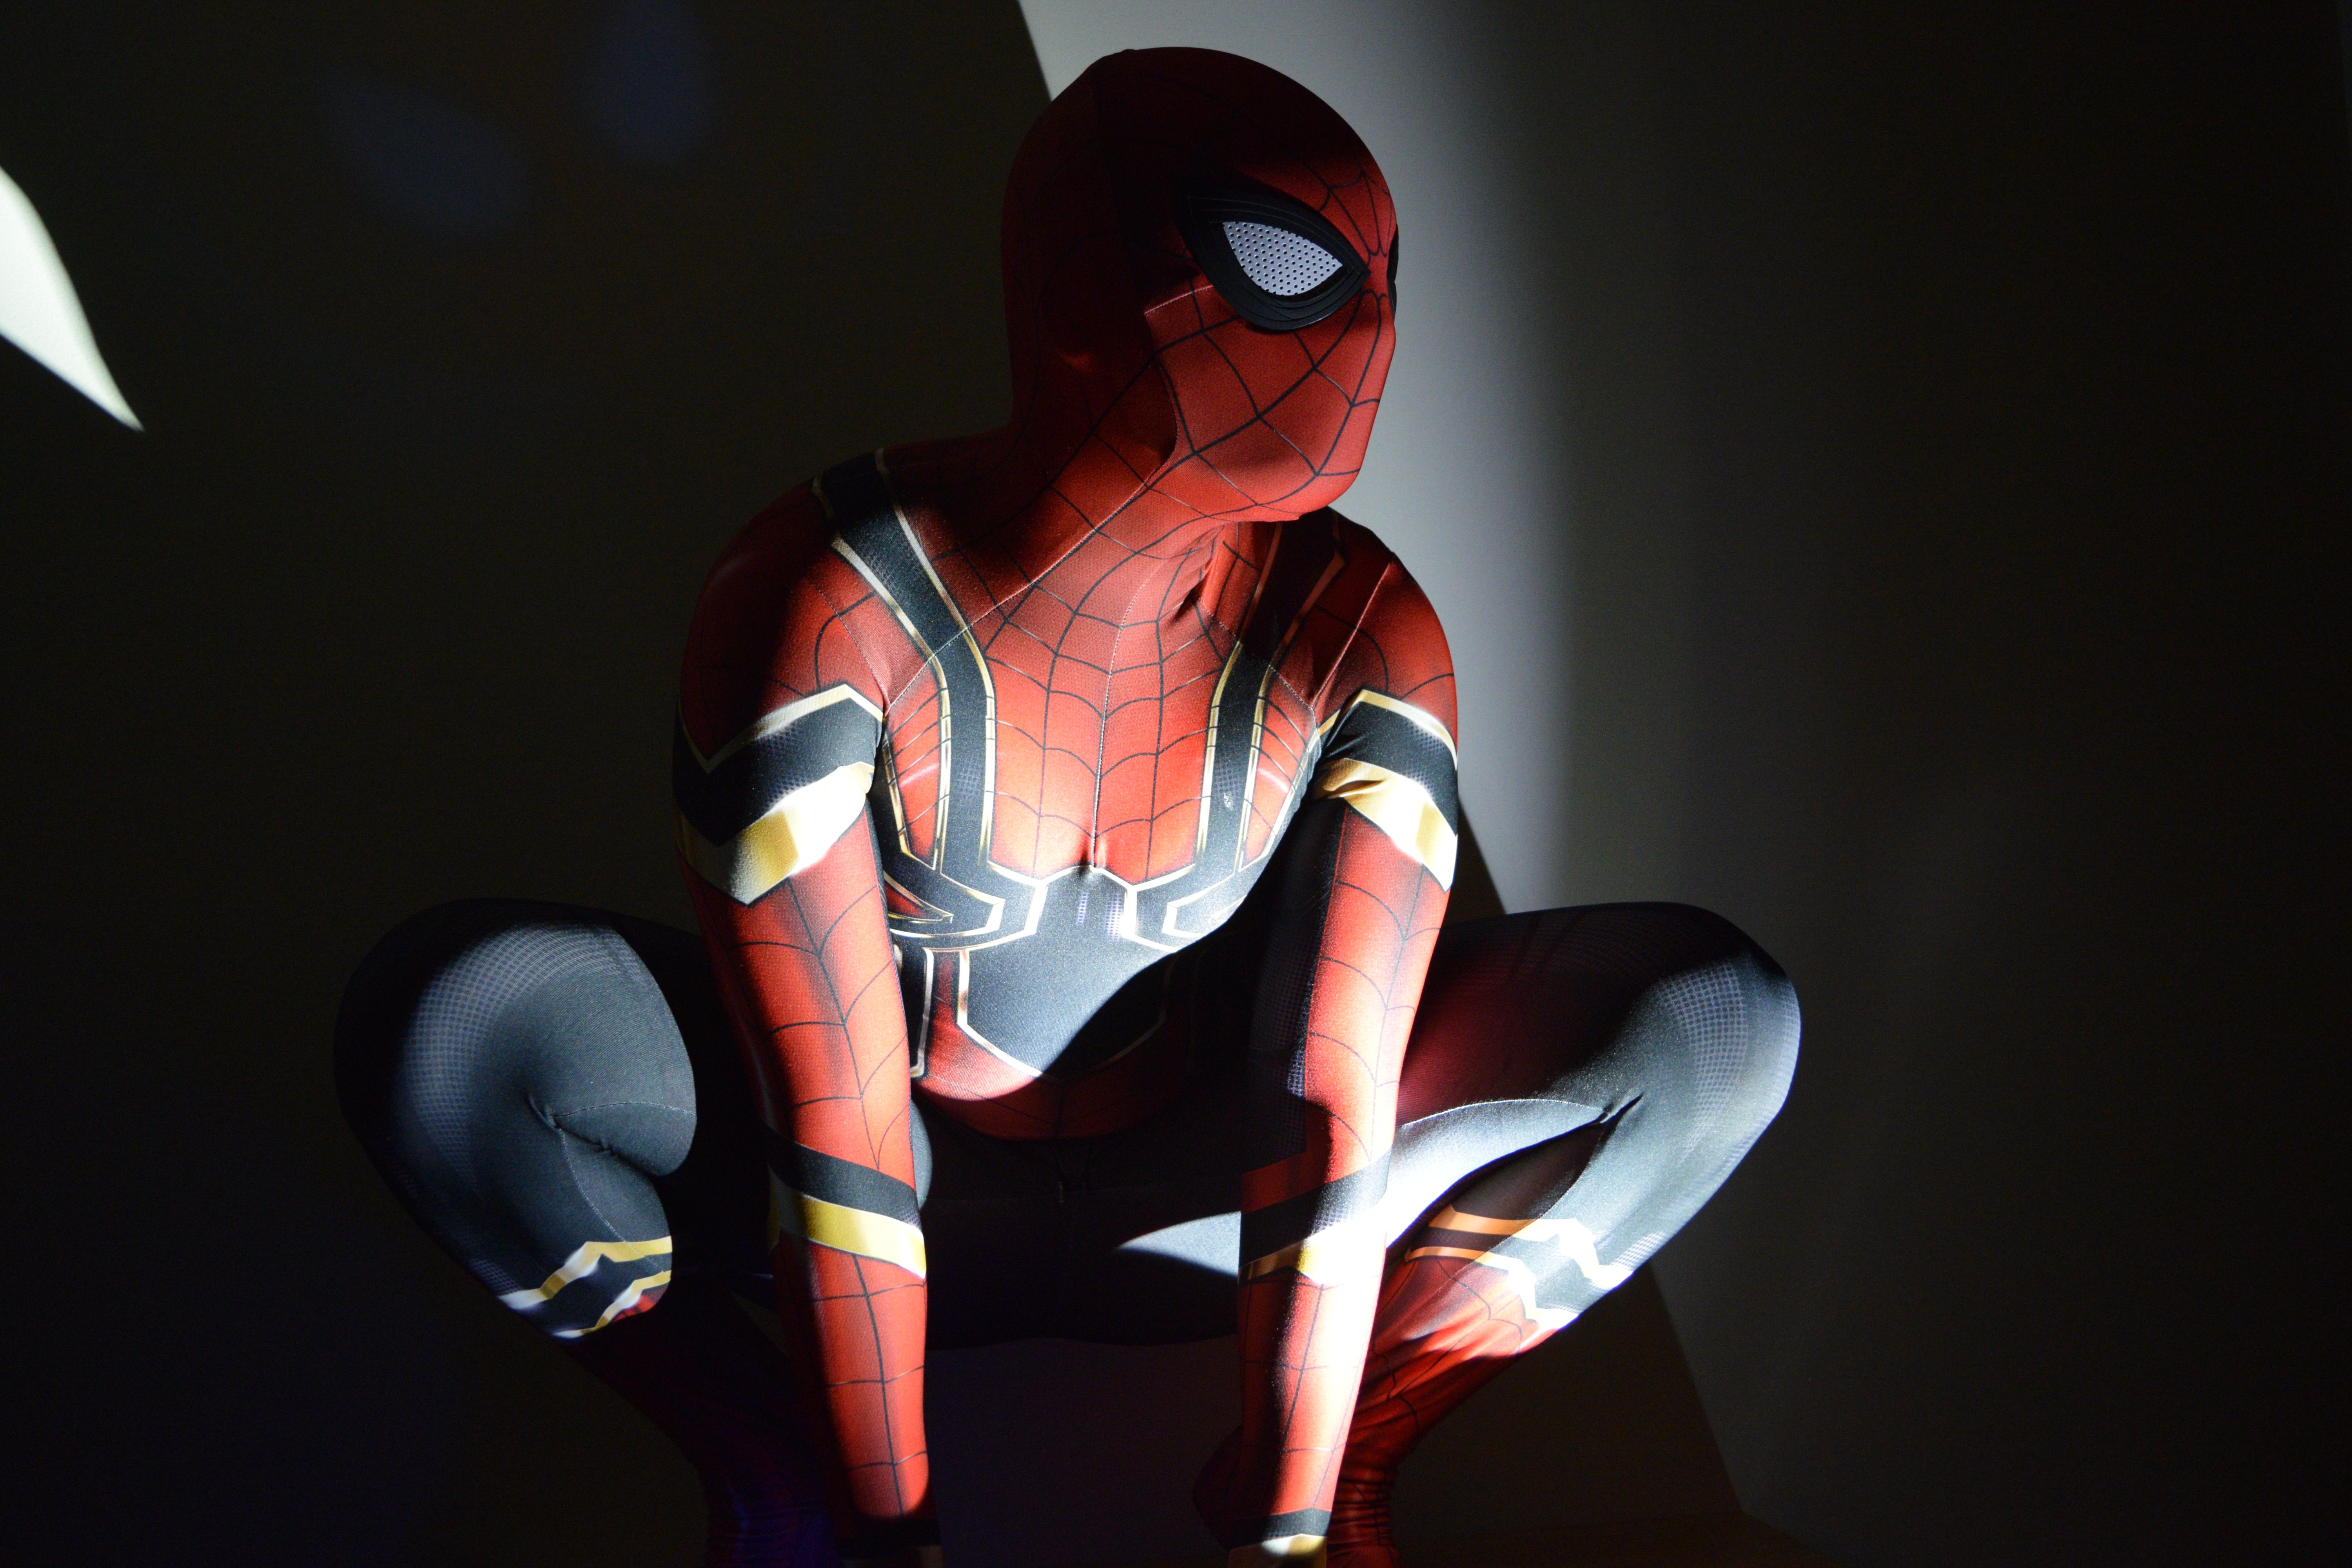 Spiderman Avengers Infinity War Suit Cosplay 5k, HD Movies, 4k